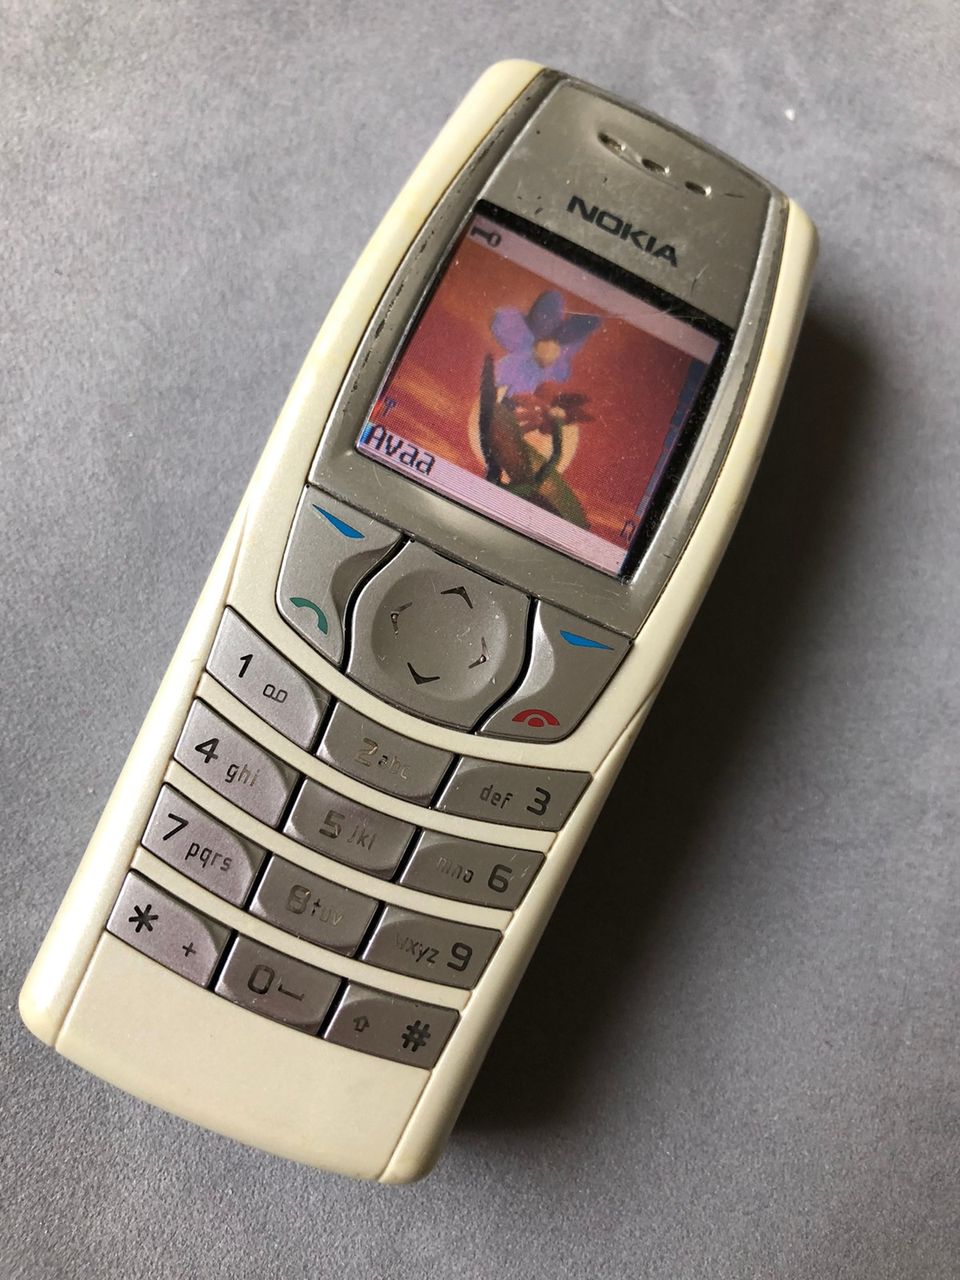 Nokia 6610 puhelin